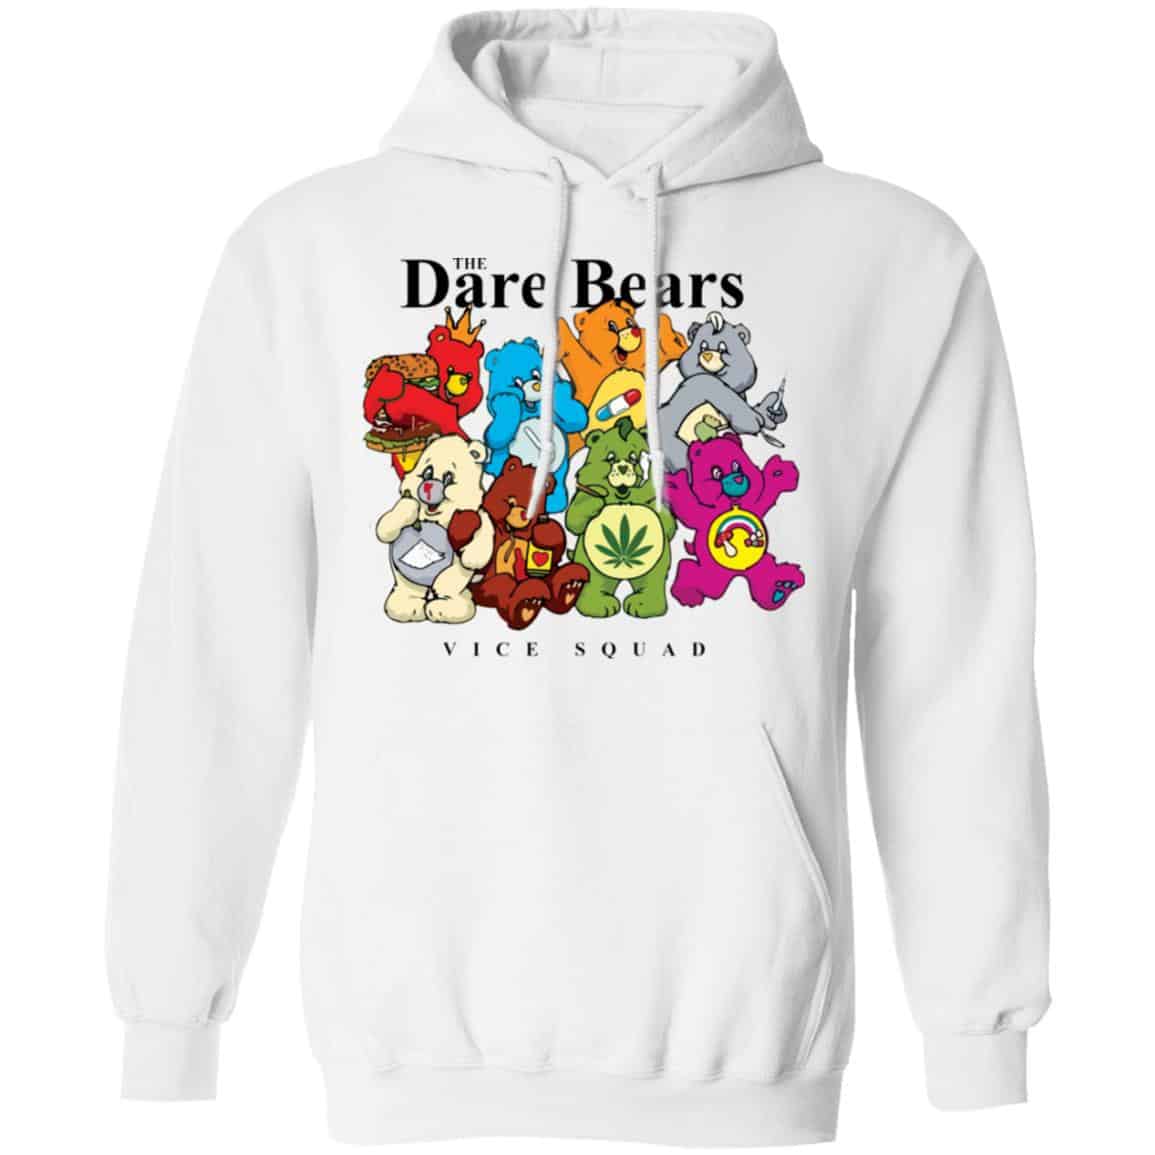 The Dare Bears Vice Squad Shirt 1